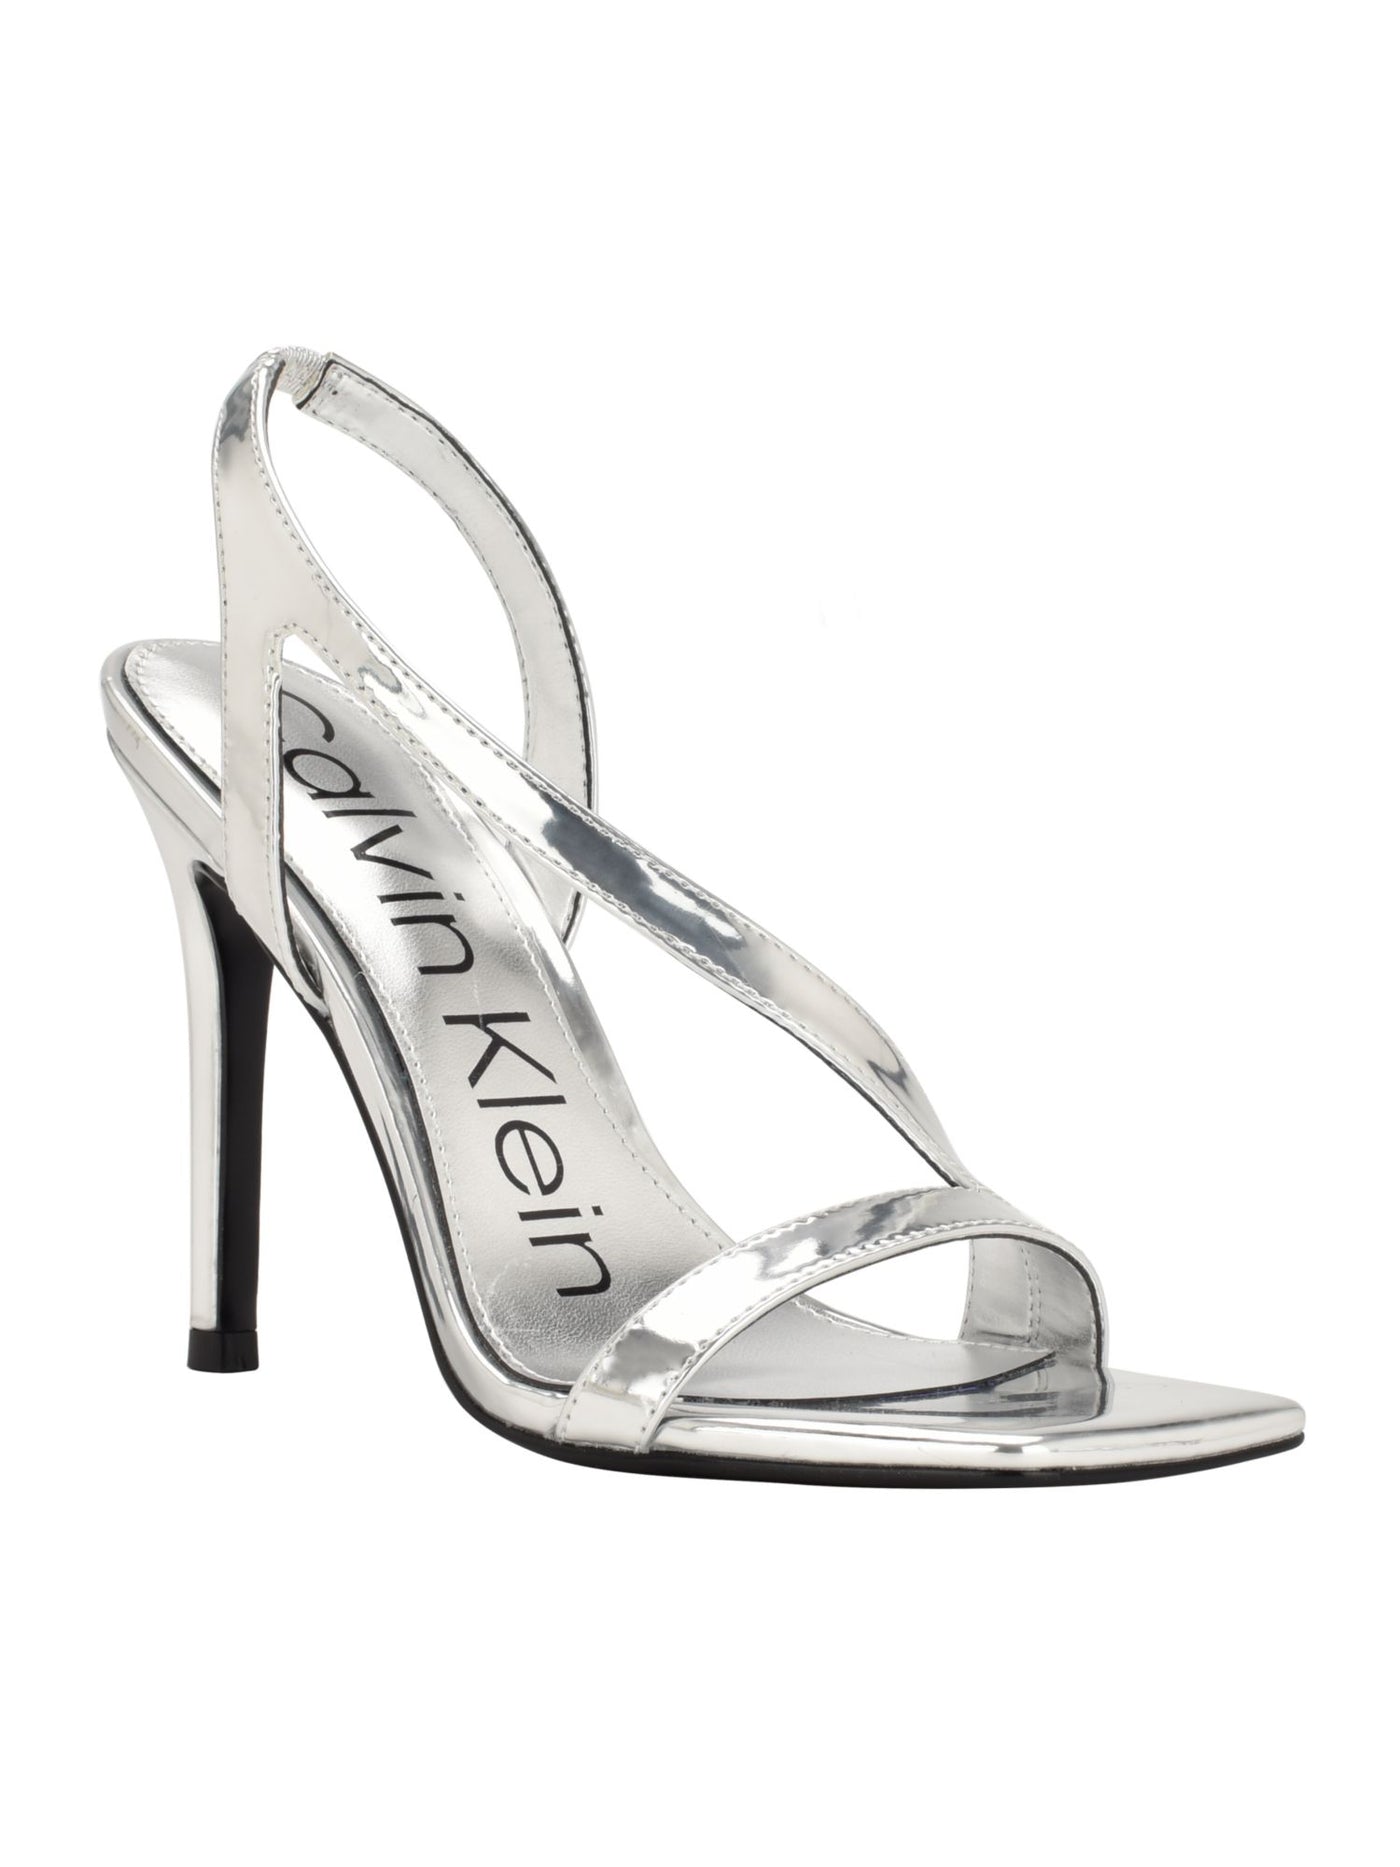 CALVIN KLEIN Womens Silver Patent Padded Asymmetrical Goring Metallic Tallon Square Toe Stiletto Slip On Dress Heeled Sandal 5 M